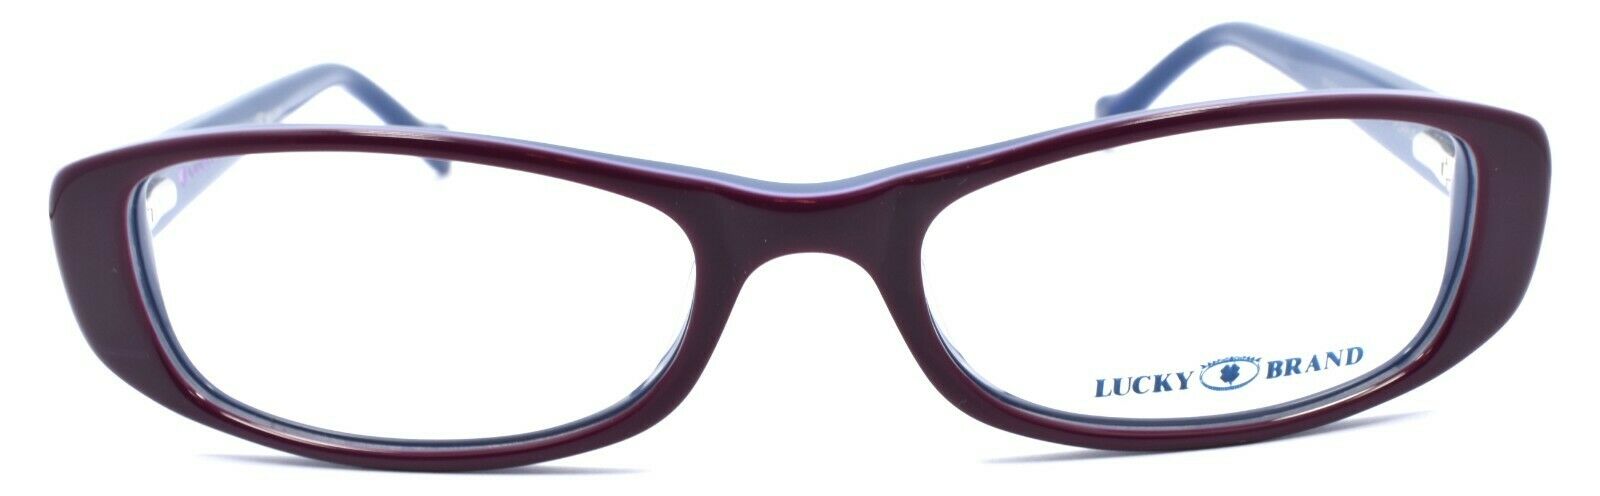 2-LUCKY BRAND Spark Plug Kids Girls Eyeglasses Frames 49-16-130 Purple + CASE-751286246193-IKSpecs